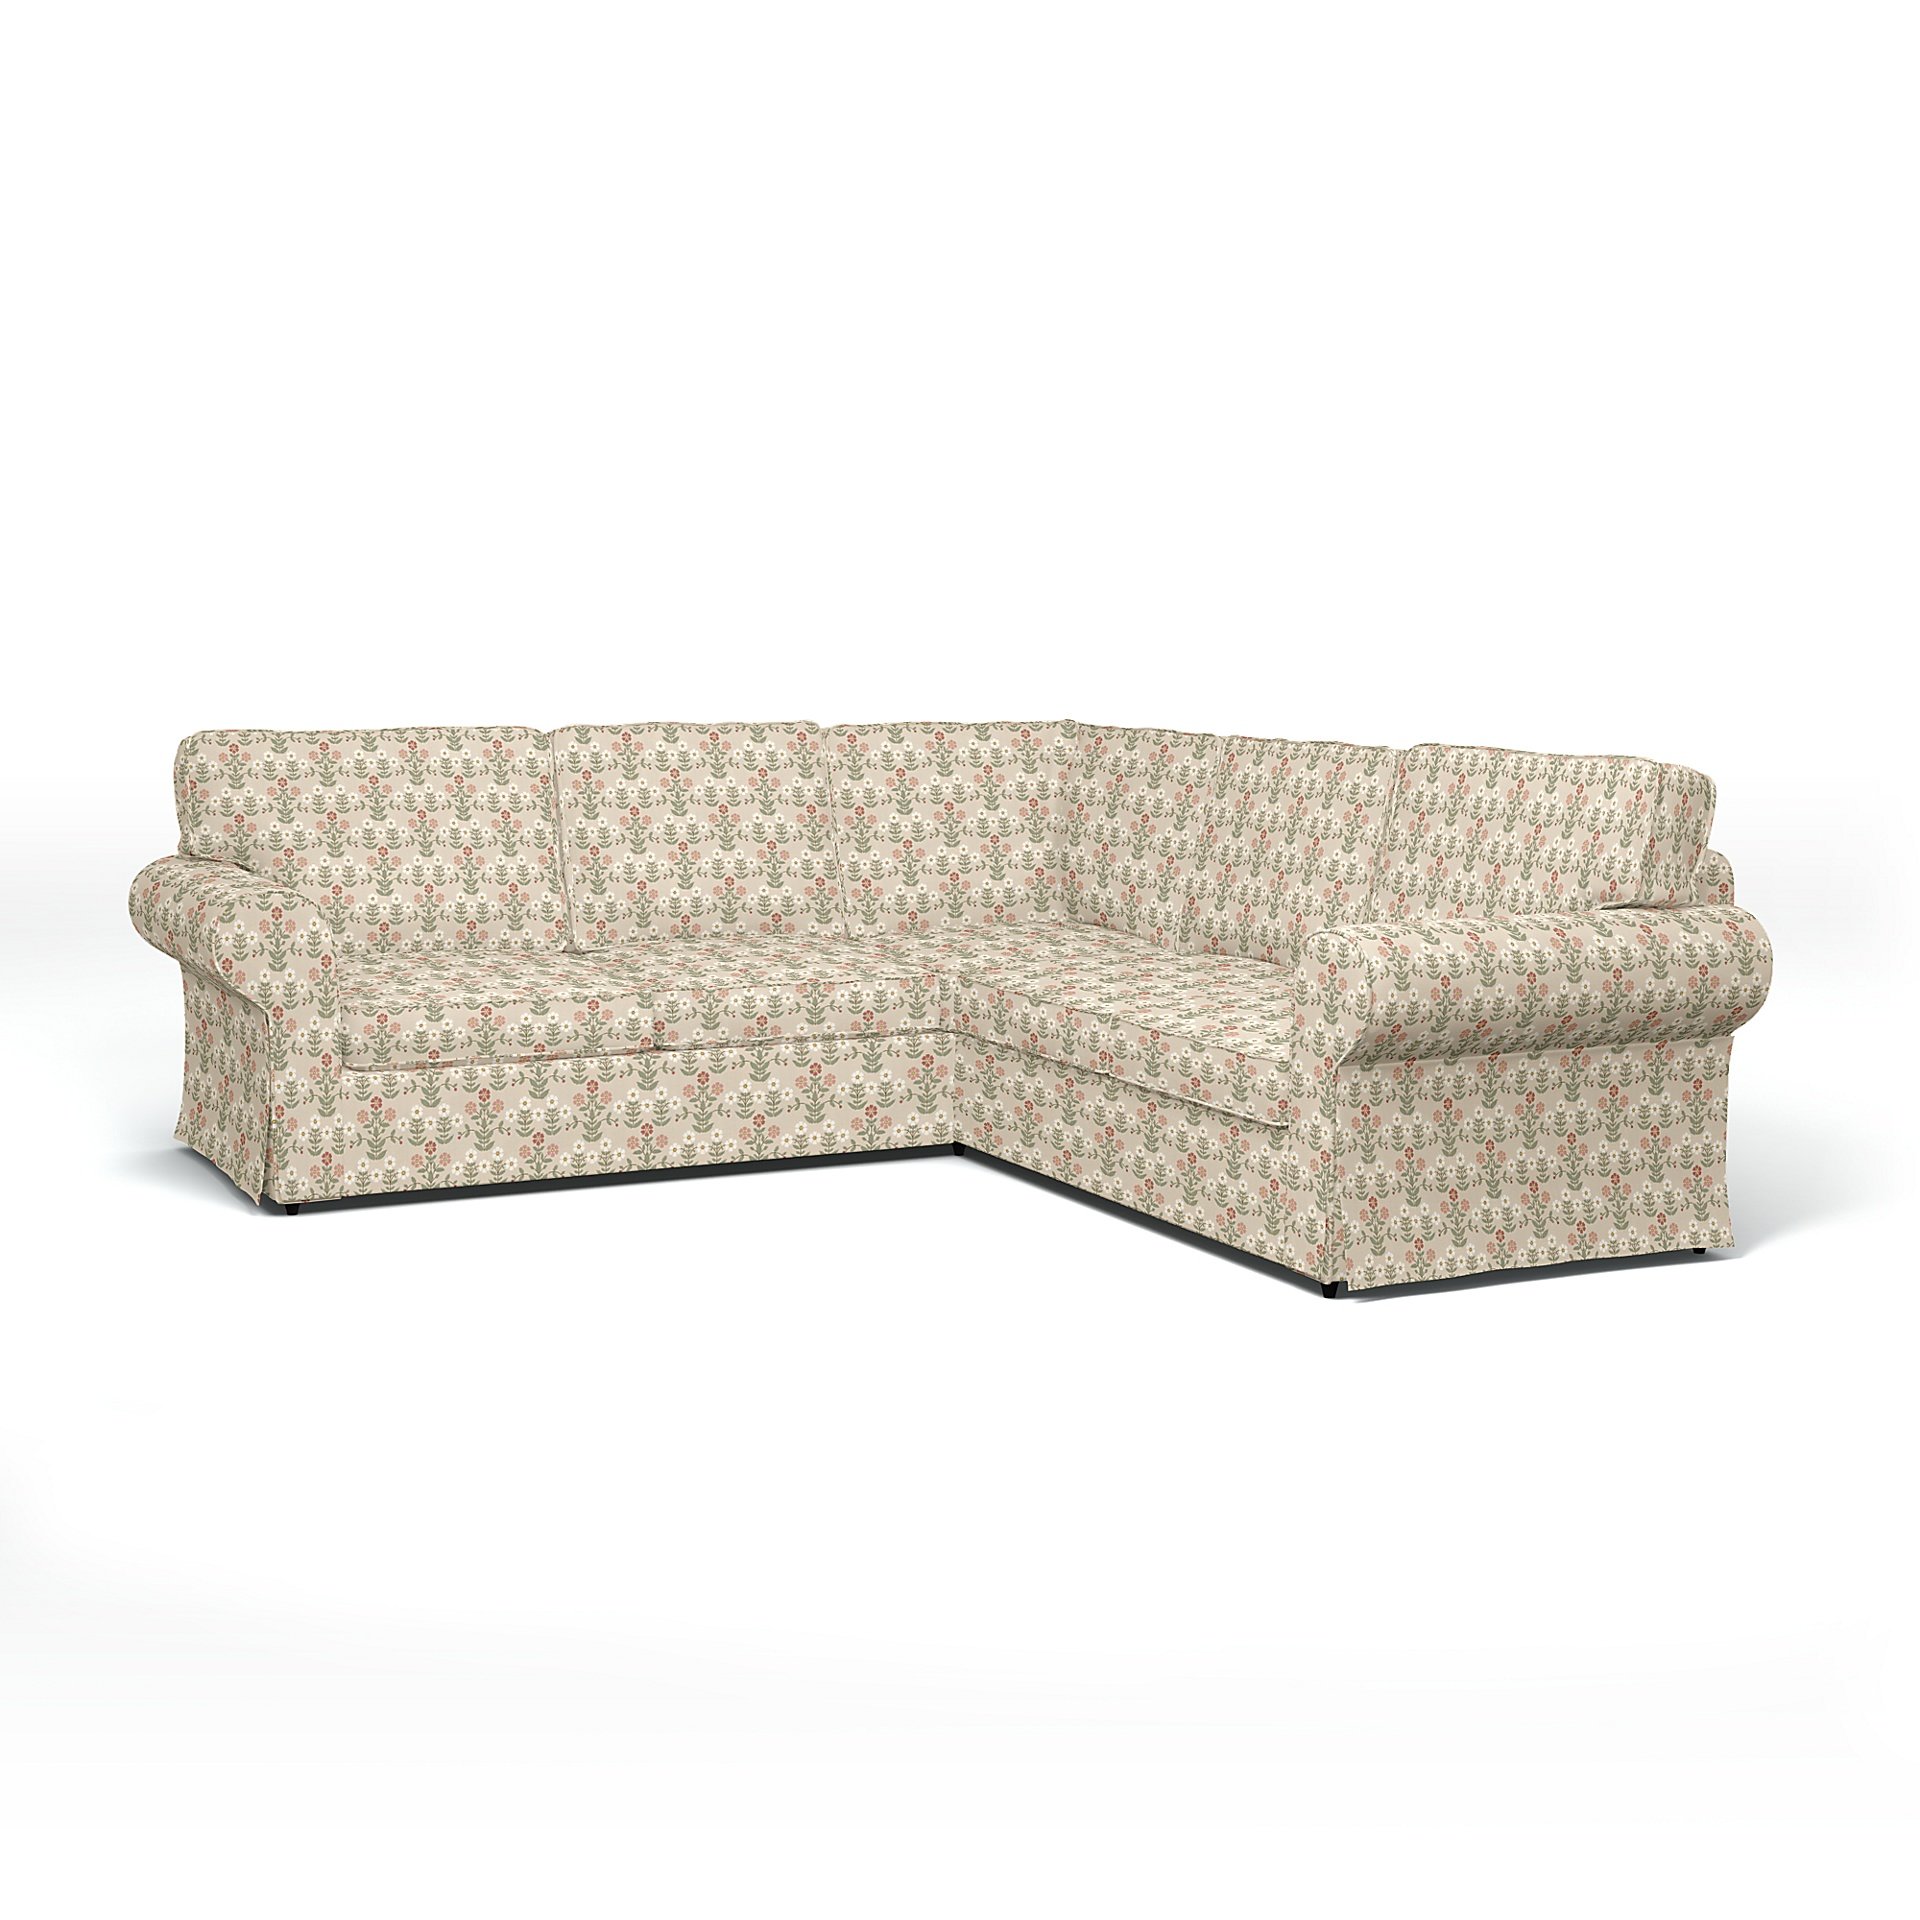 IKEA - Ektorp 4 Seater Corner Sofa Cover, Pink Sippor, BEMZ x BORASTAPETER COLLECTION - Bemz